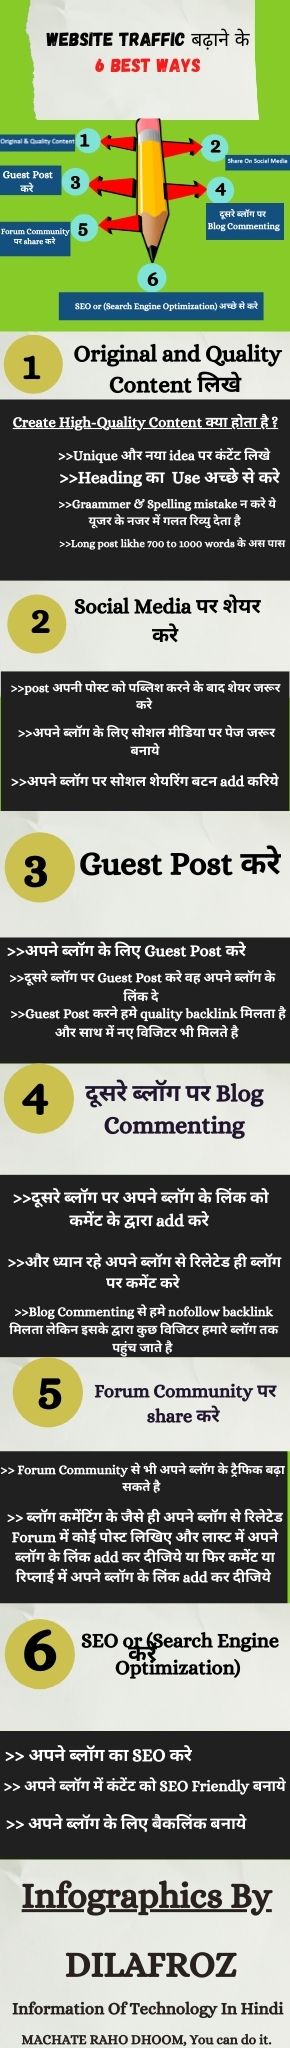 Website ki traffic badhane ke 6 Tips Infographic in hindi Dilafroz